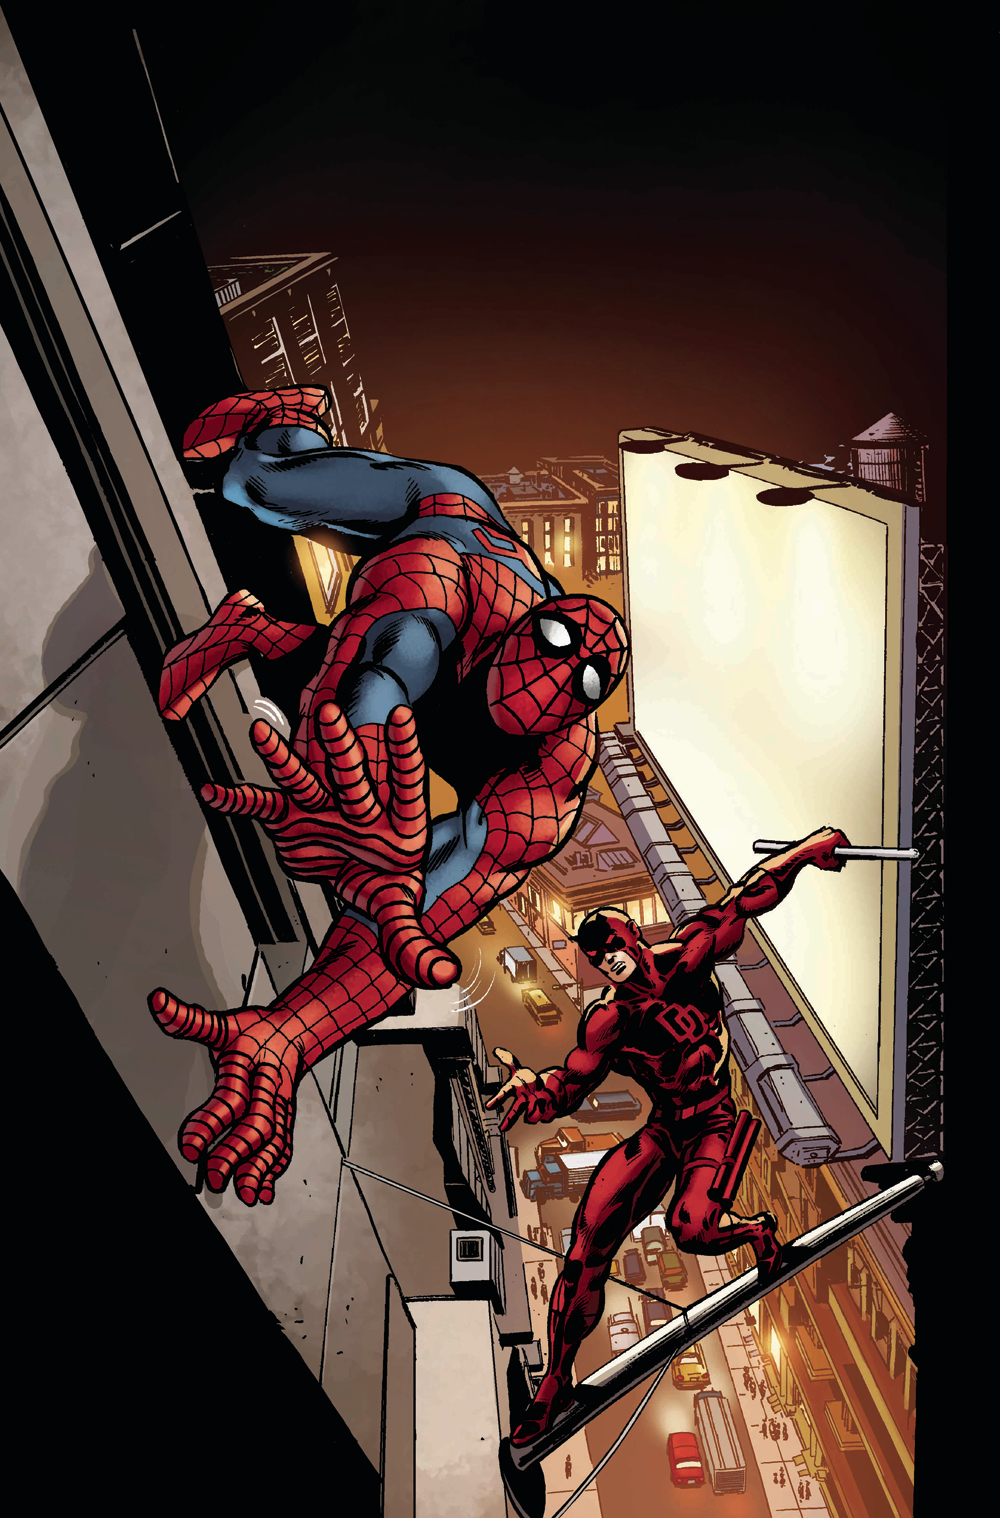 Peter Parker Spectacular Spider-Man #300 Marvel Comic Book 2018 New Copy! 